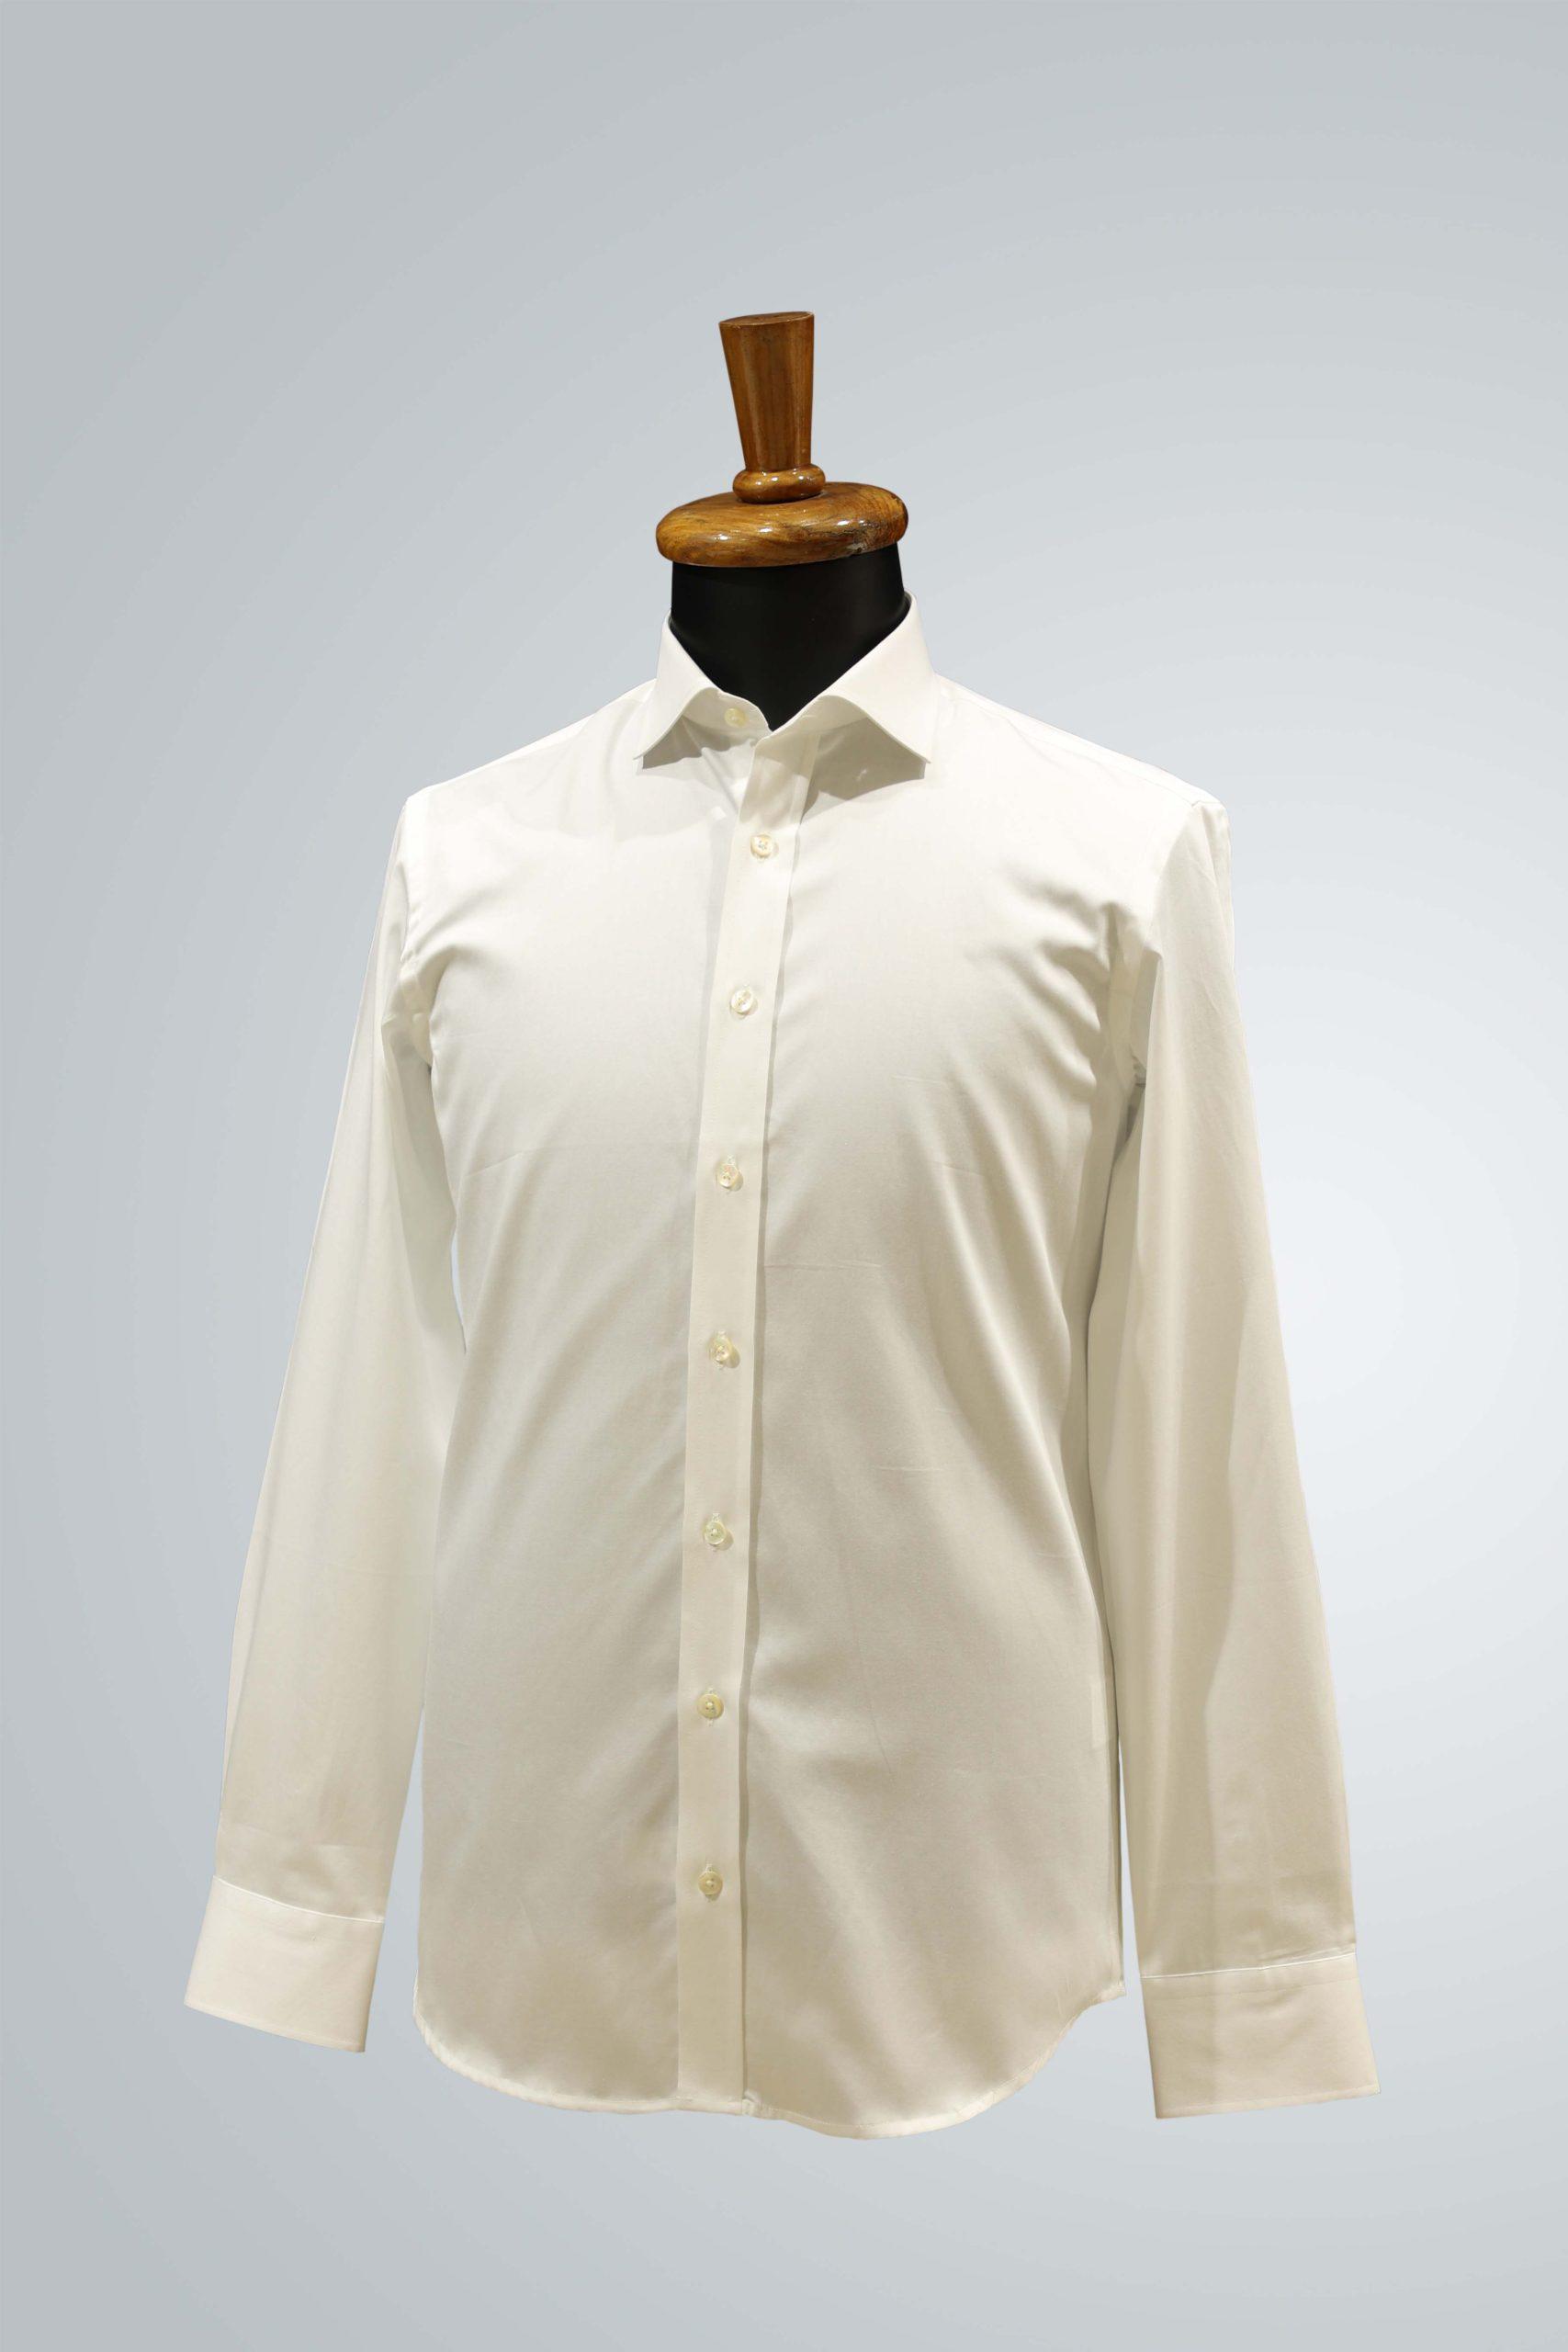 Portfolio White Shirt - Portfolio